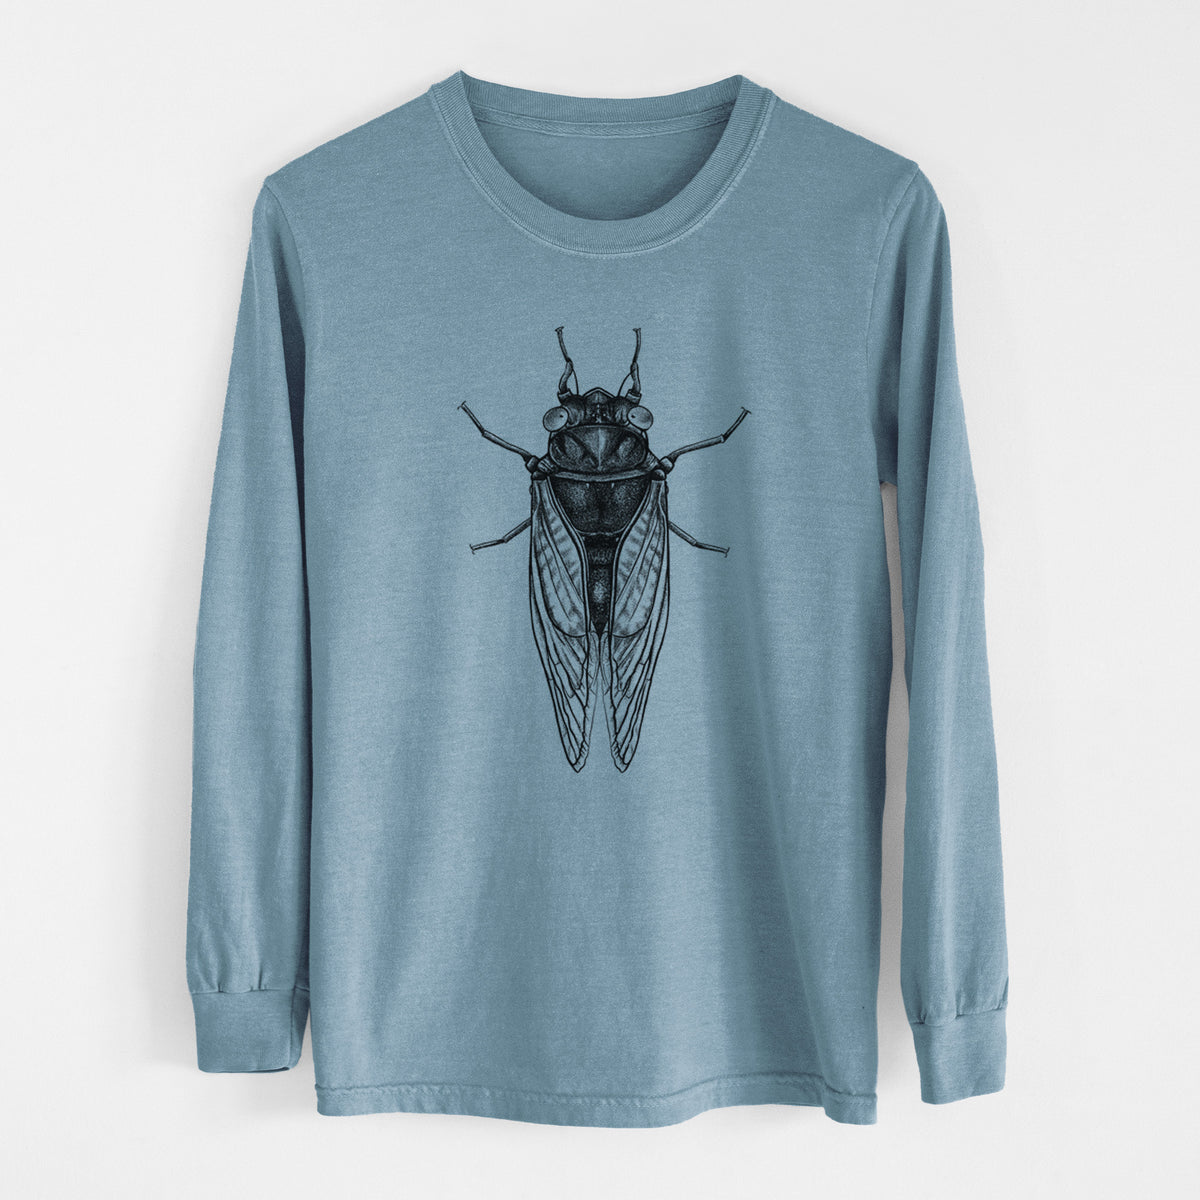 Pharoh Cicada - Magicicada septendecim - Heavyweight 100% Cotton Long Sleeve